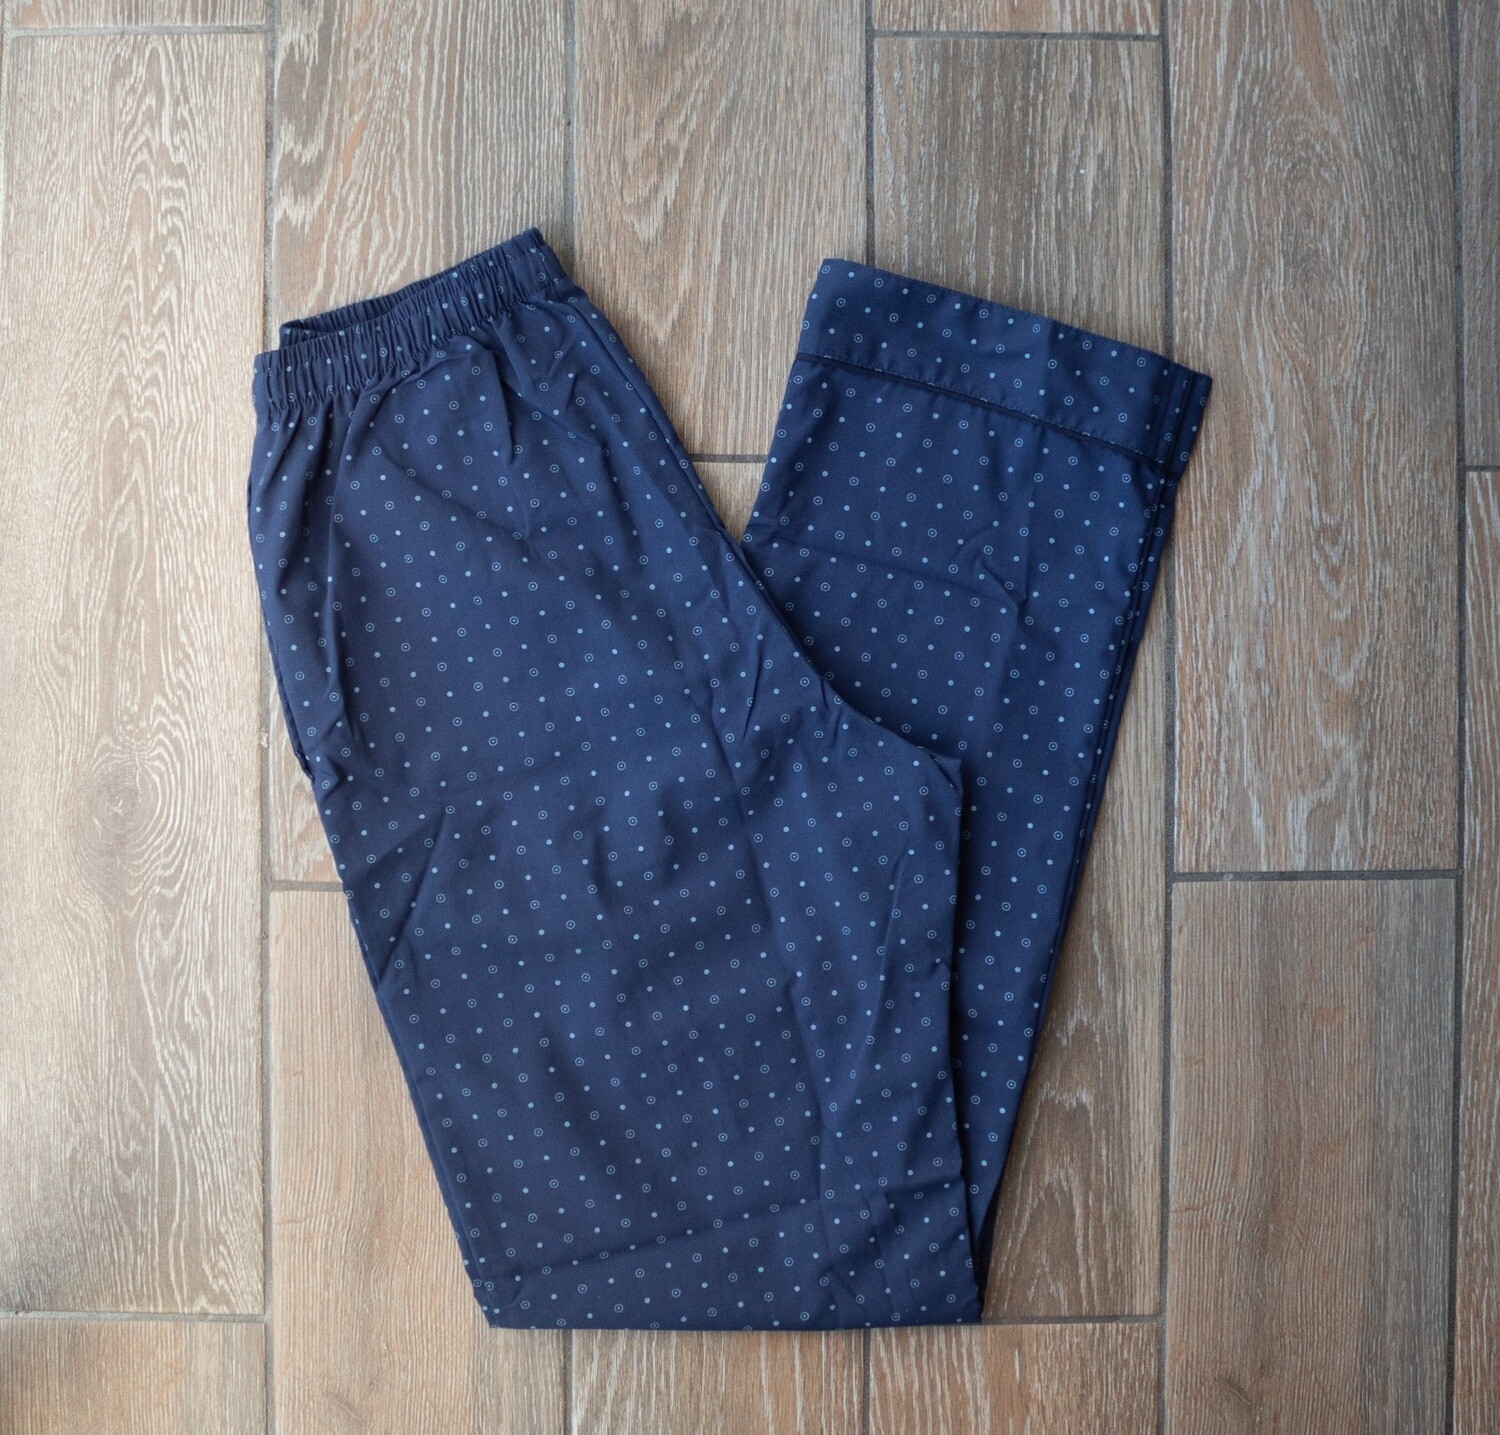 Pantalón Pijama Caballero color Azul